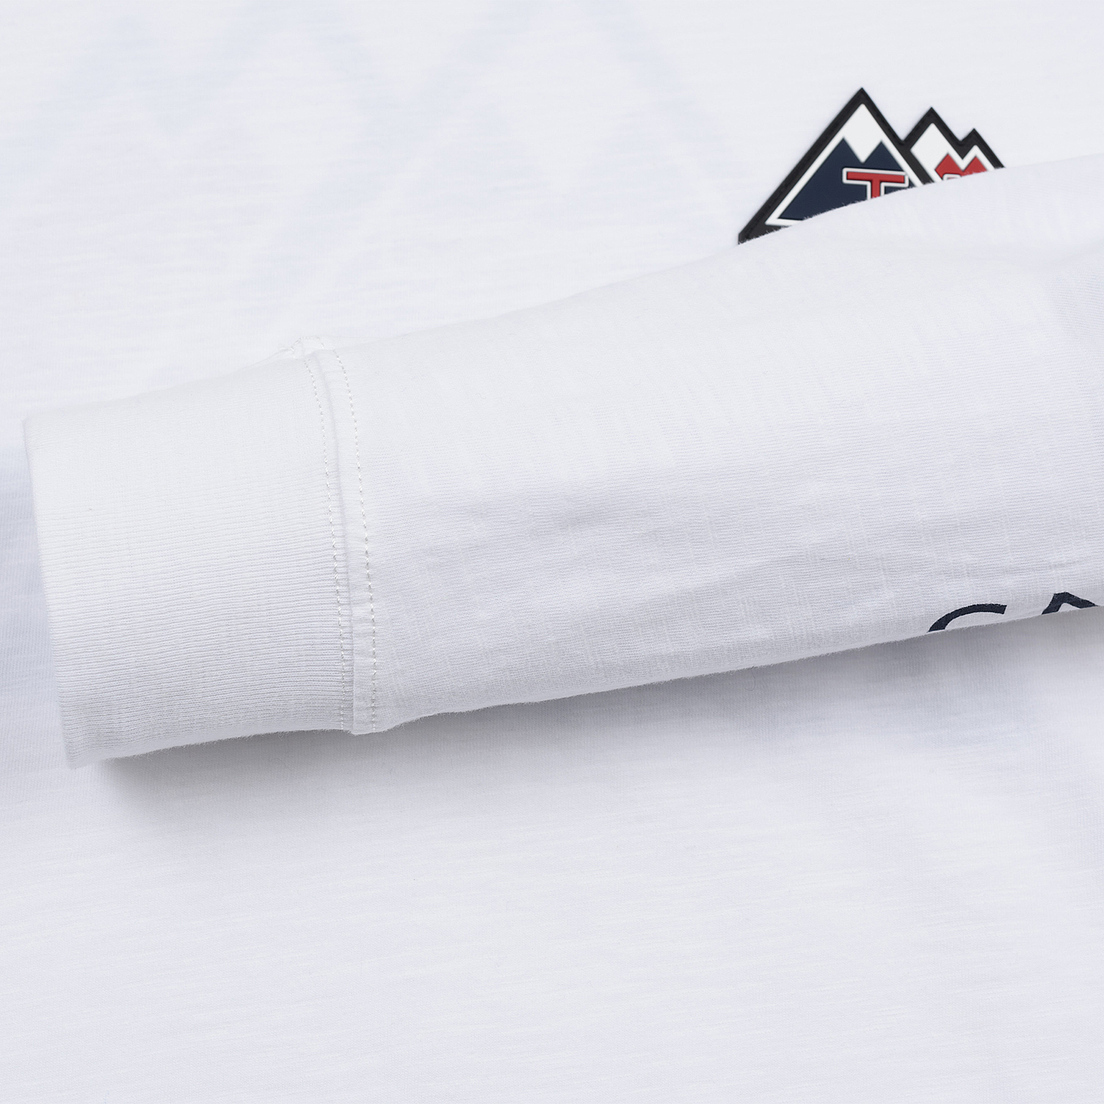 Tommy Jeans Мужской лонгслив USA Mountain Logo Relaxed Fit